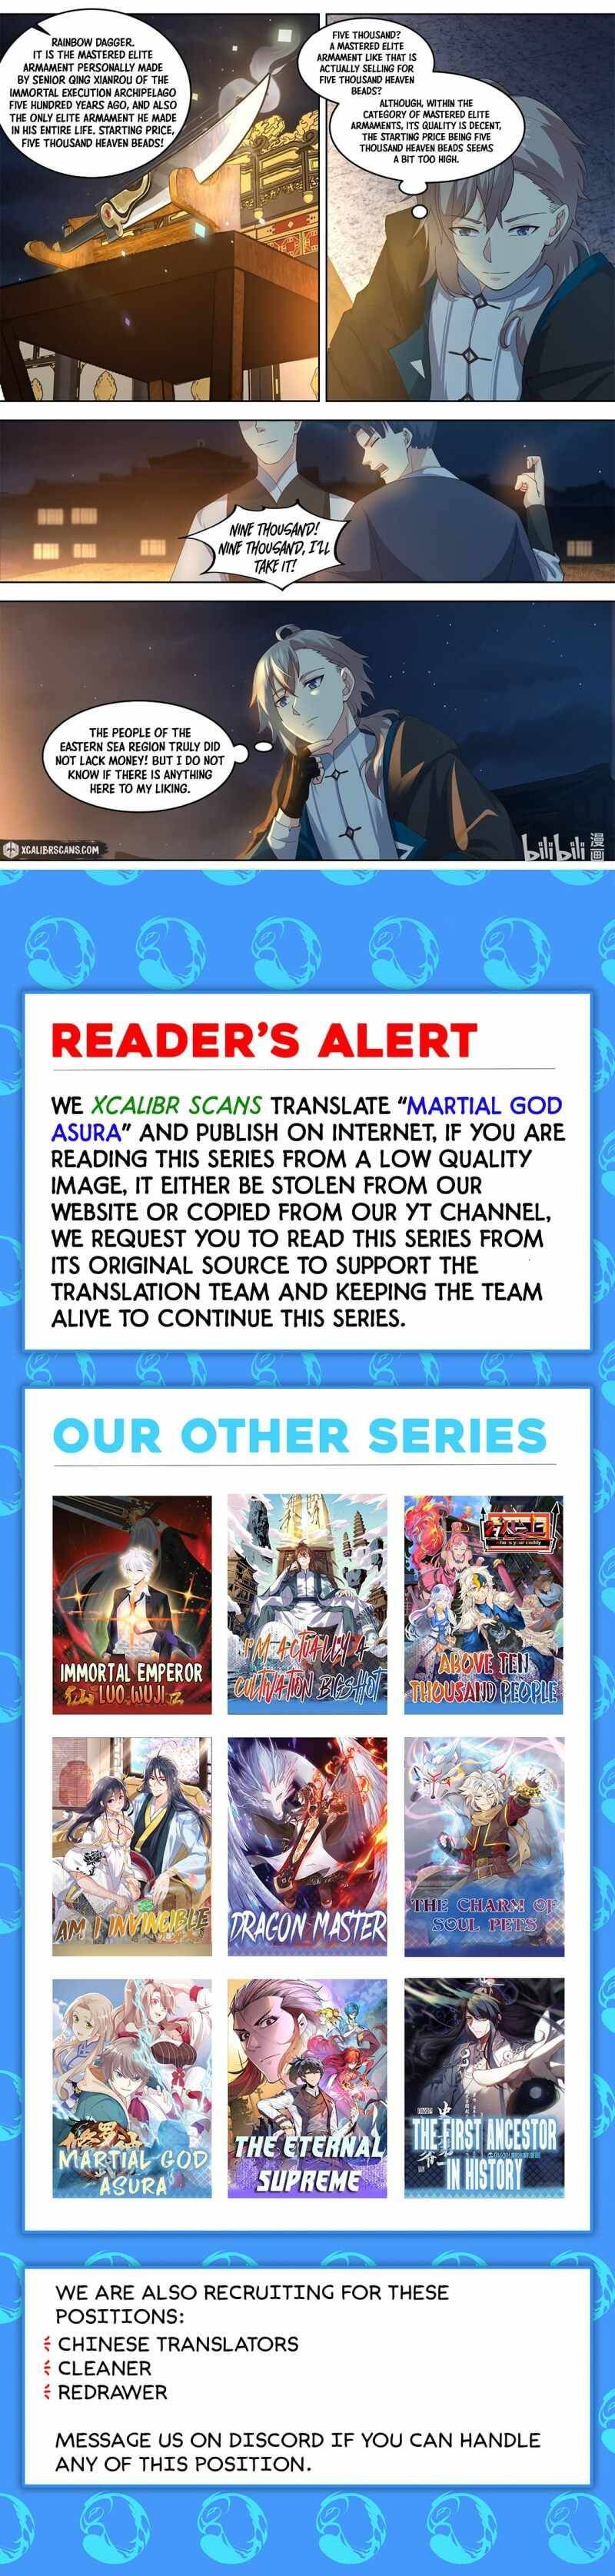 Martial God Asura Chapter 419 page 5